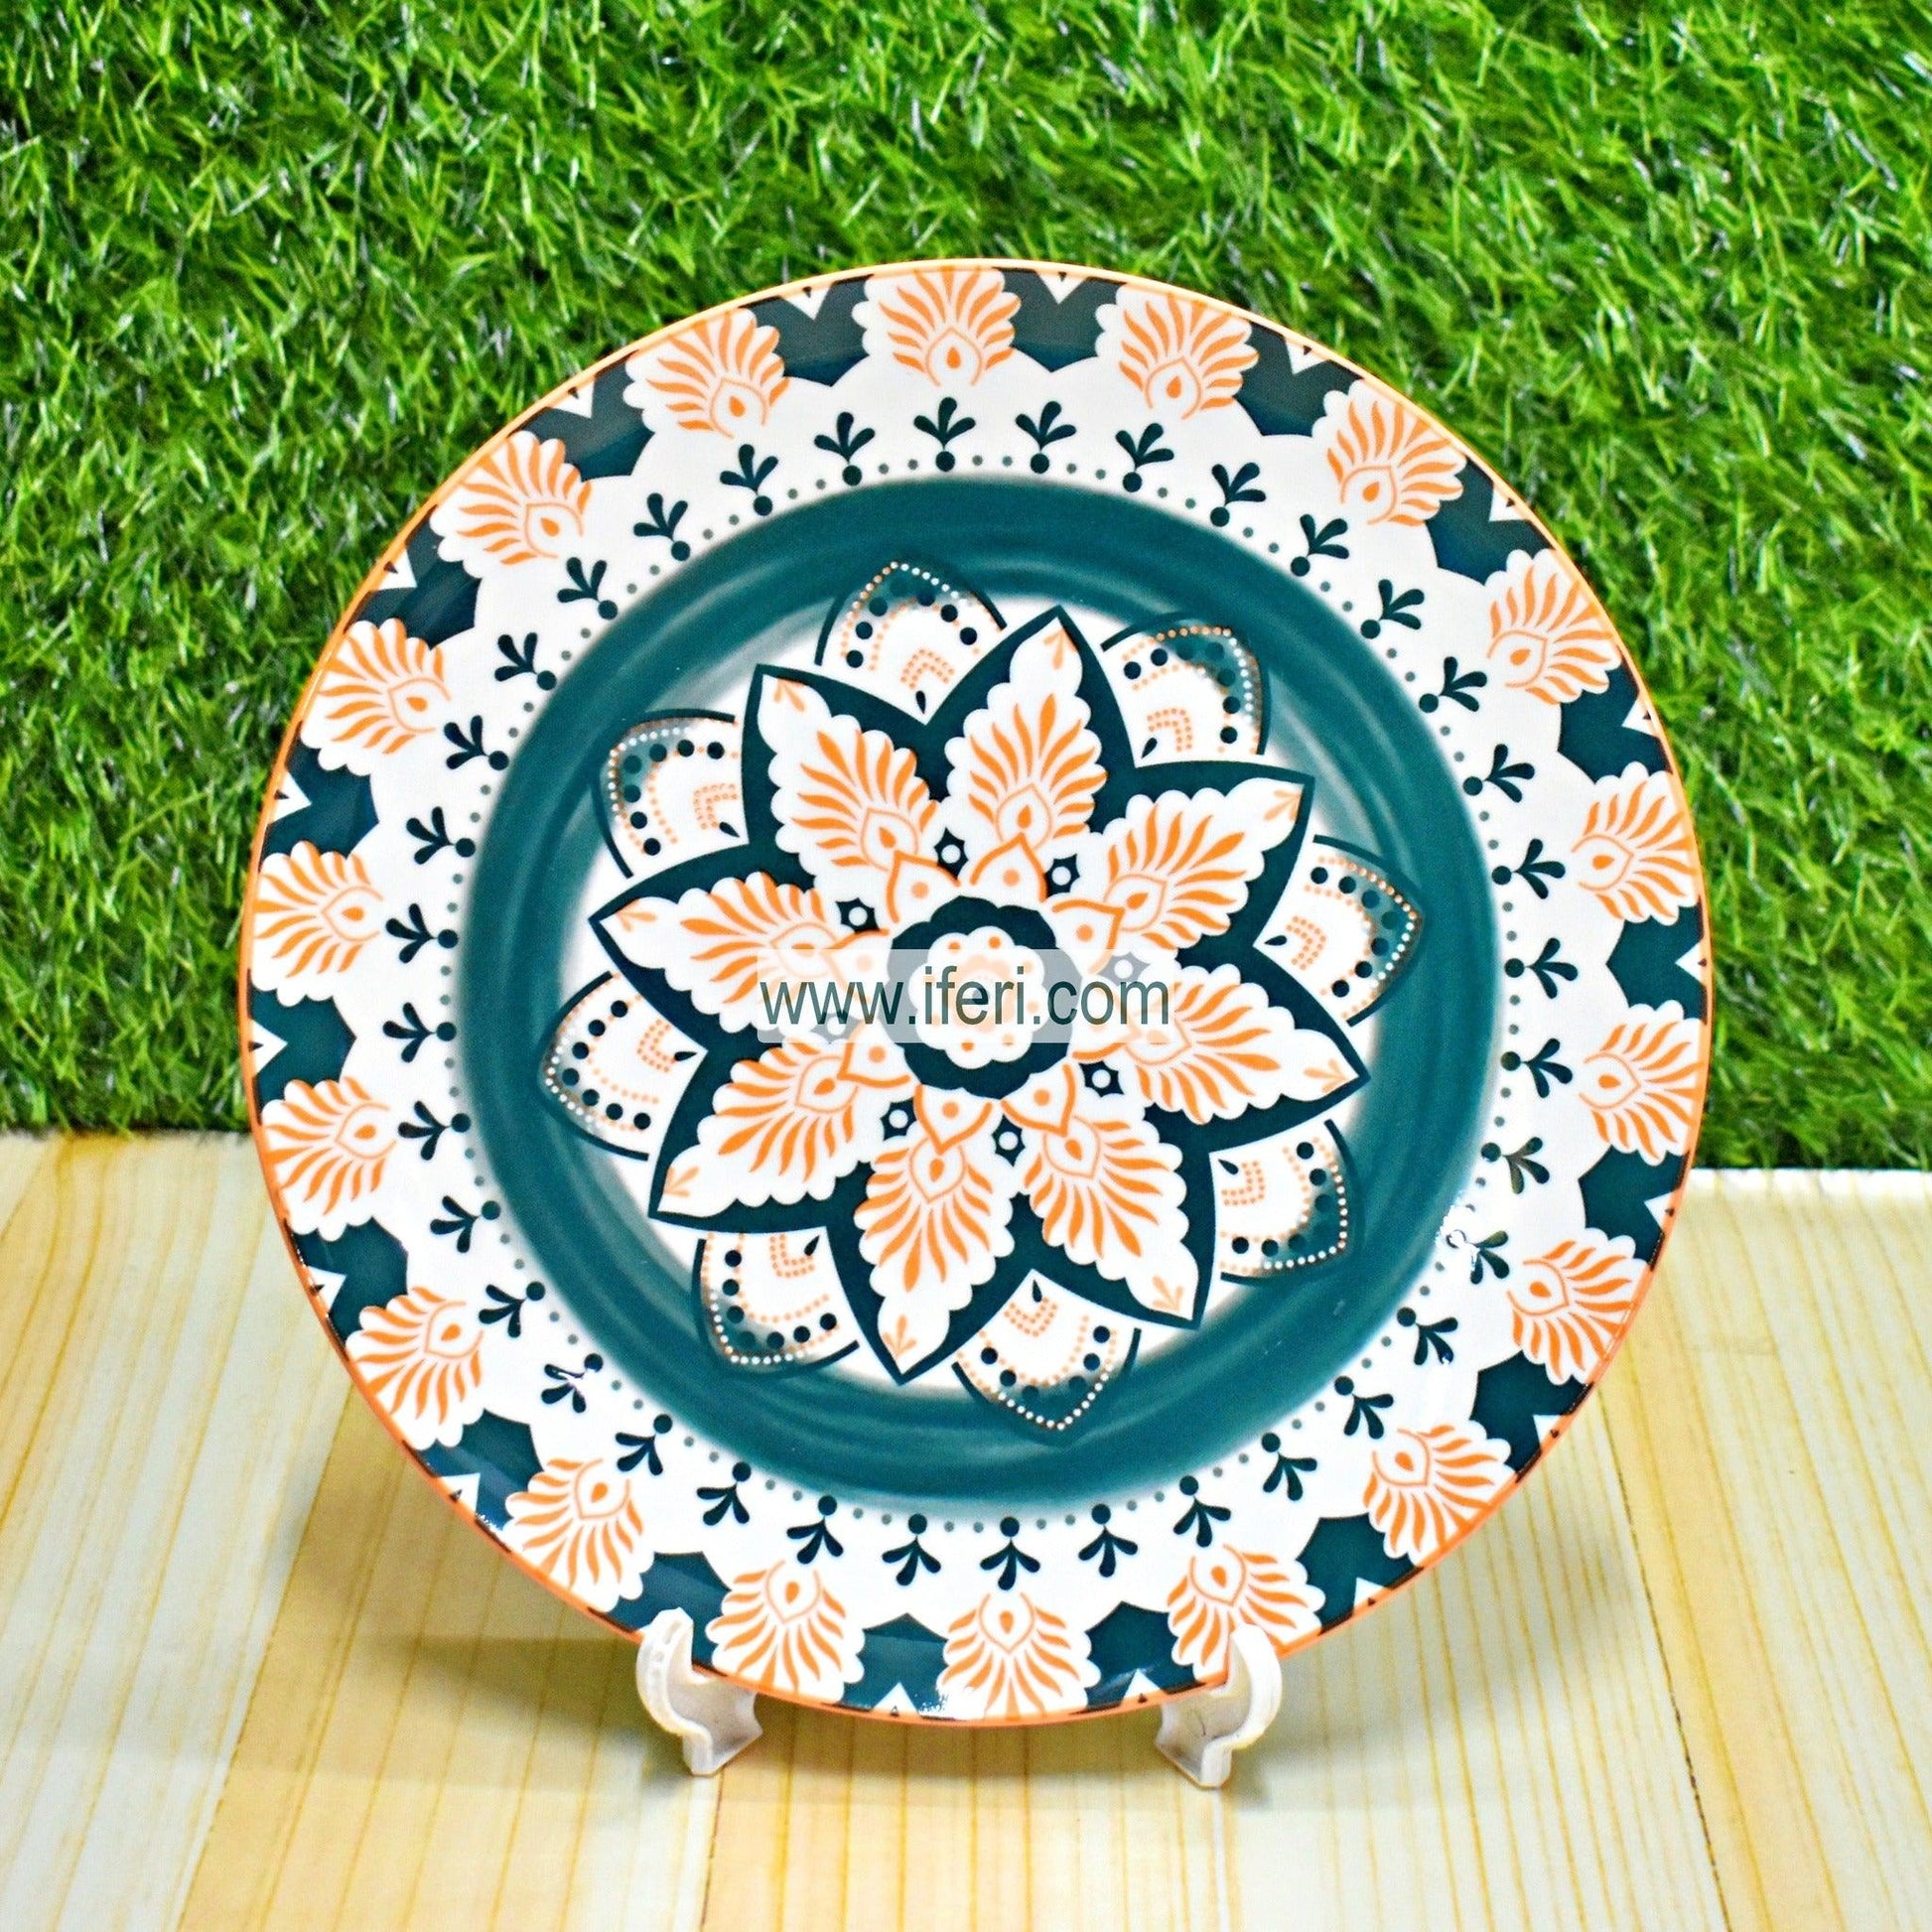 10 Inch Ceramic Full/Rice Plate SY0096 Price in Bangladesh - iferi.com